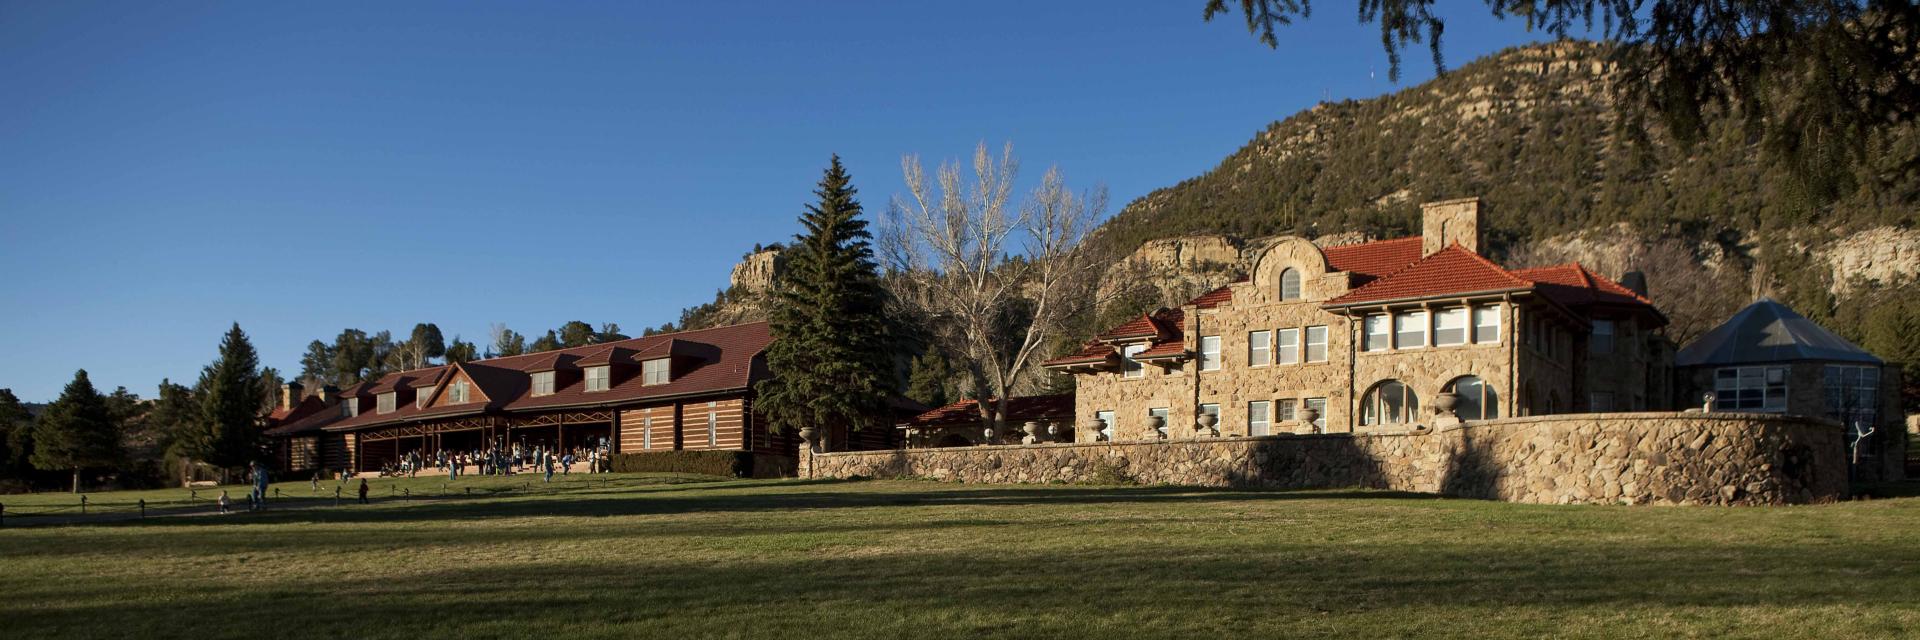 Casa Grande and main lodge